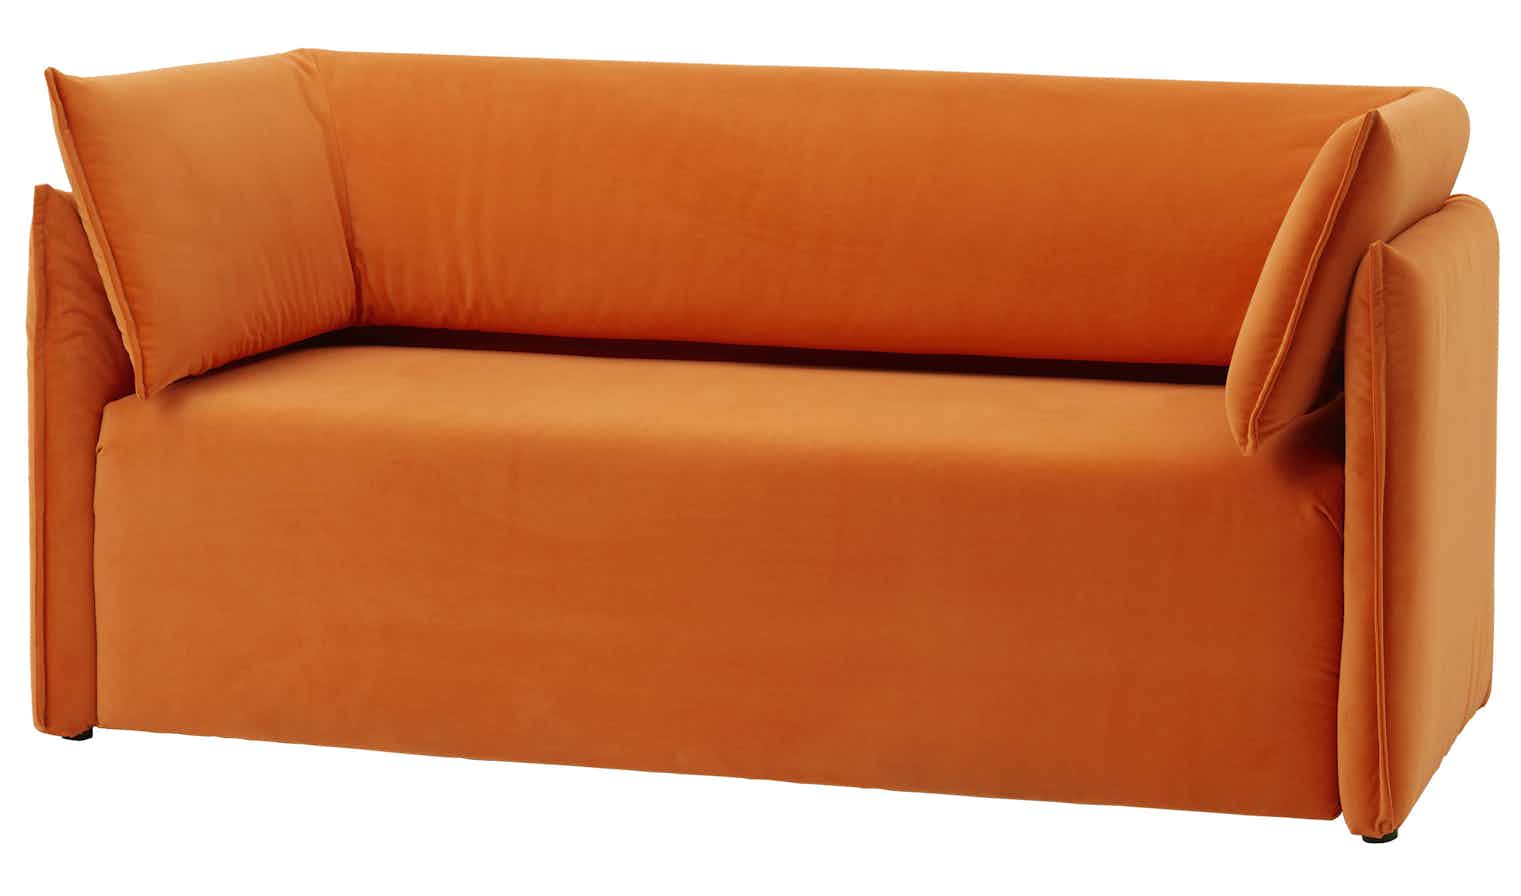 Articles furniture orange boxlike sofa haute living 2021 03 31 142611